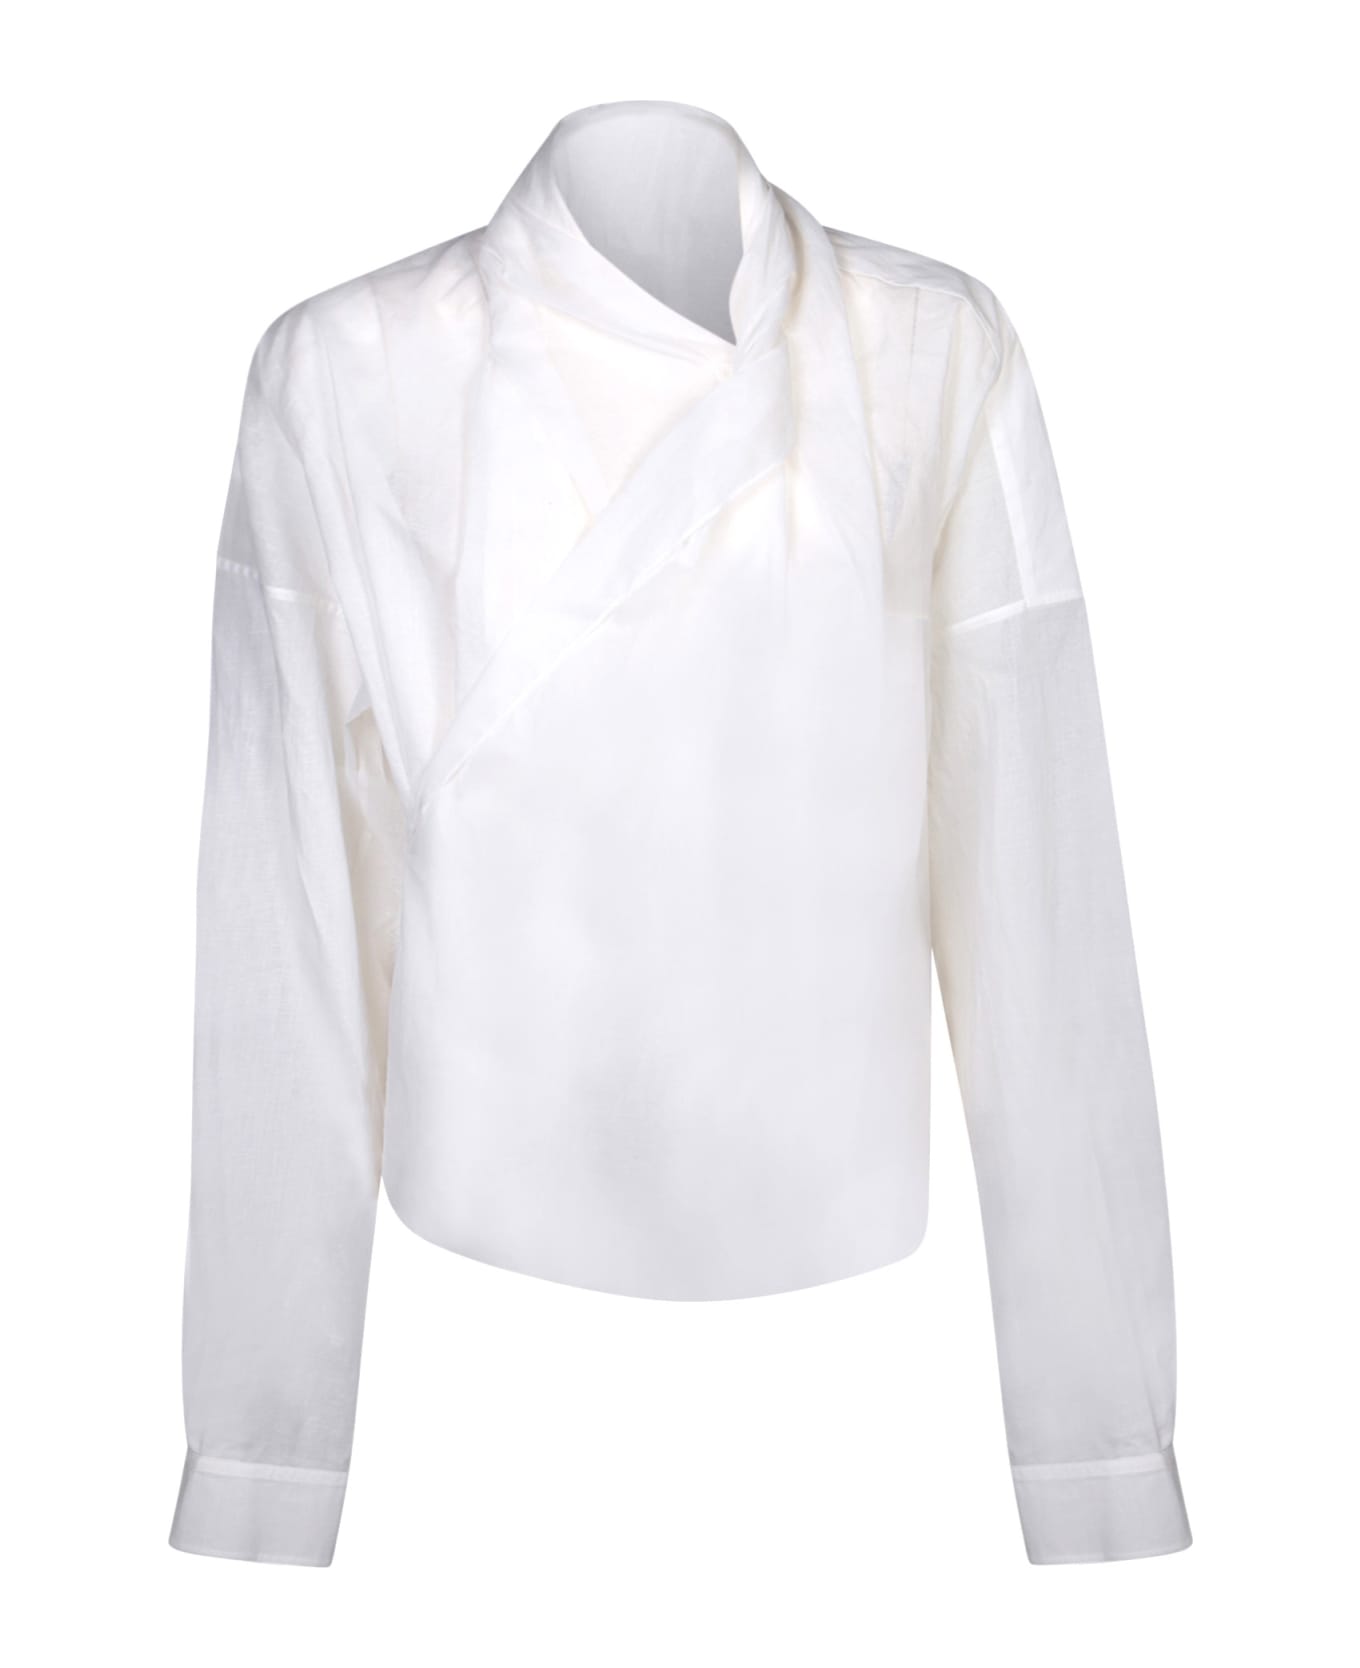 Quira White Wrap Shirt - White